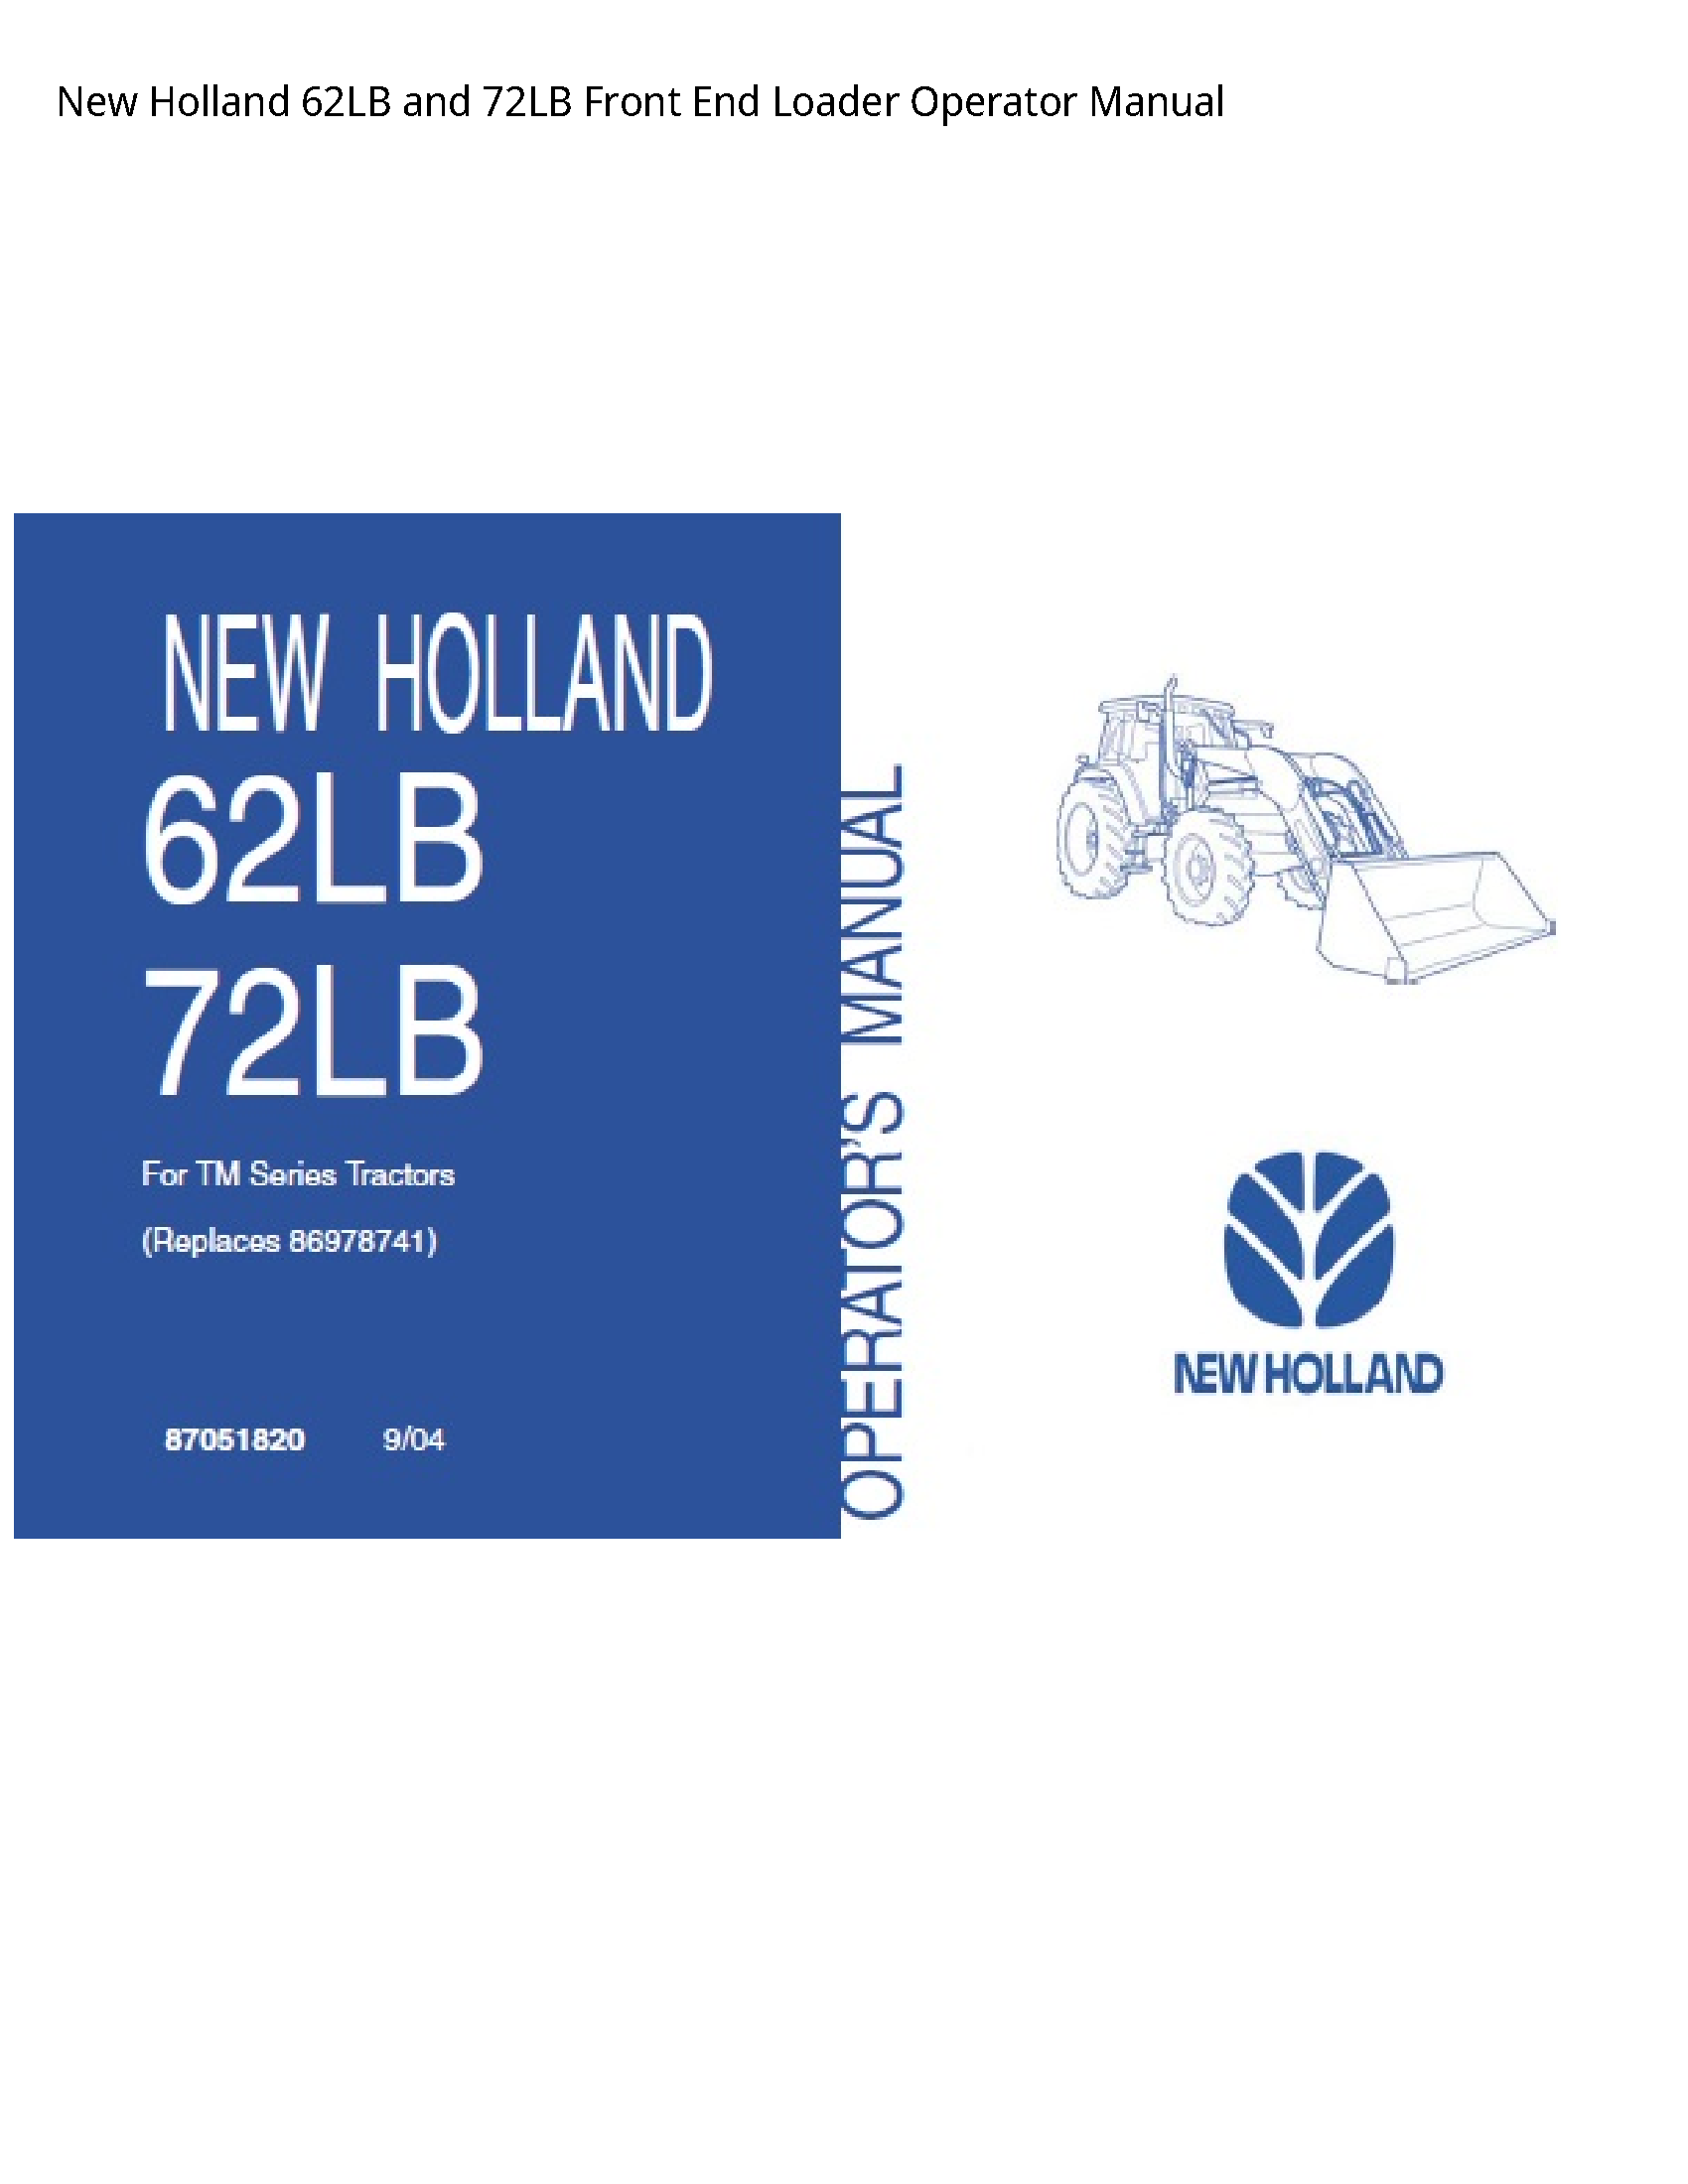 New Holland 62LB  Front End Loader Operator manual